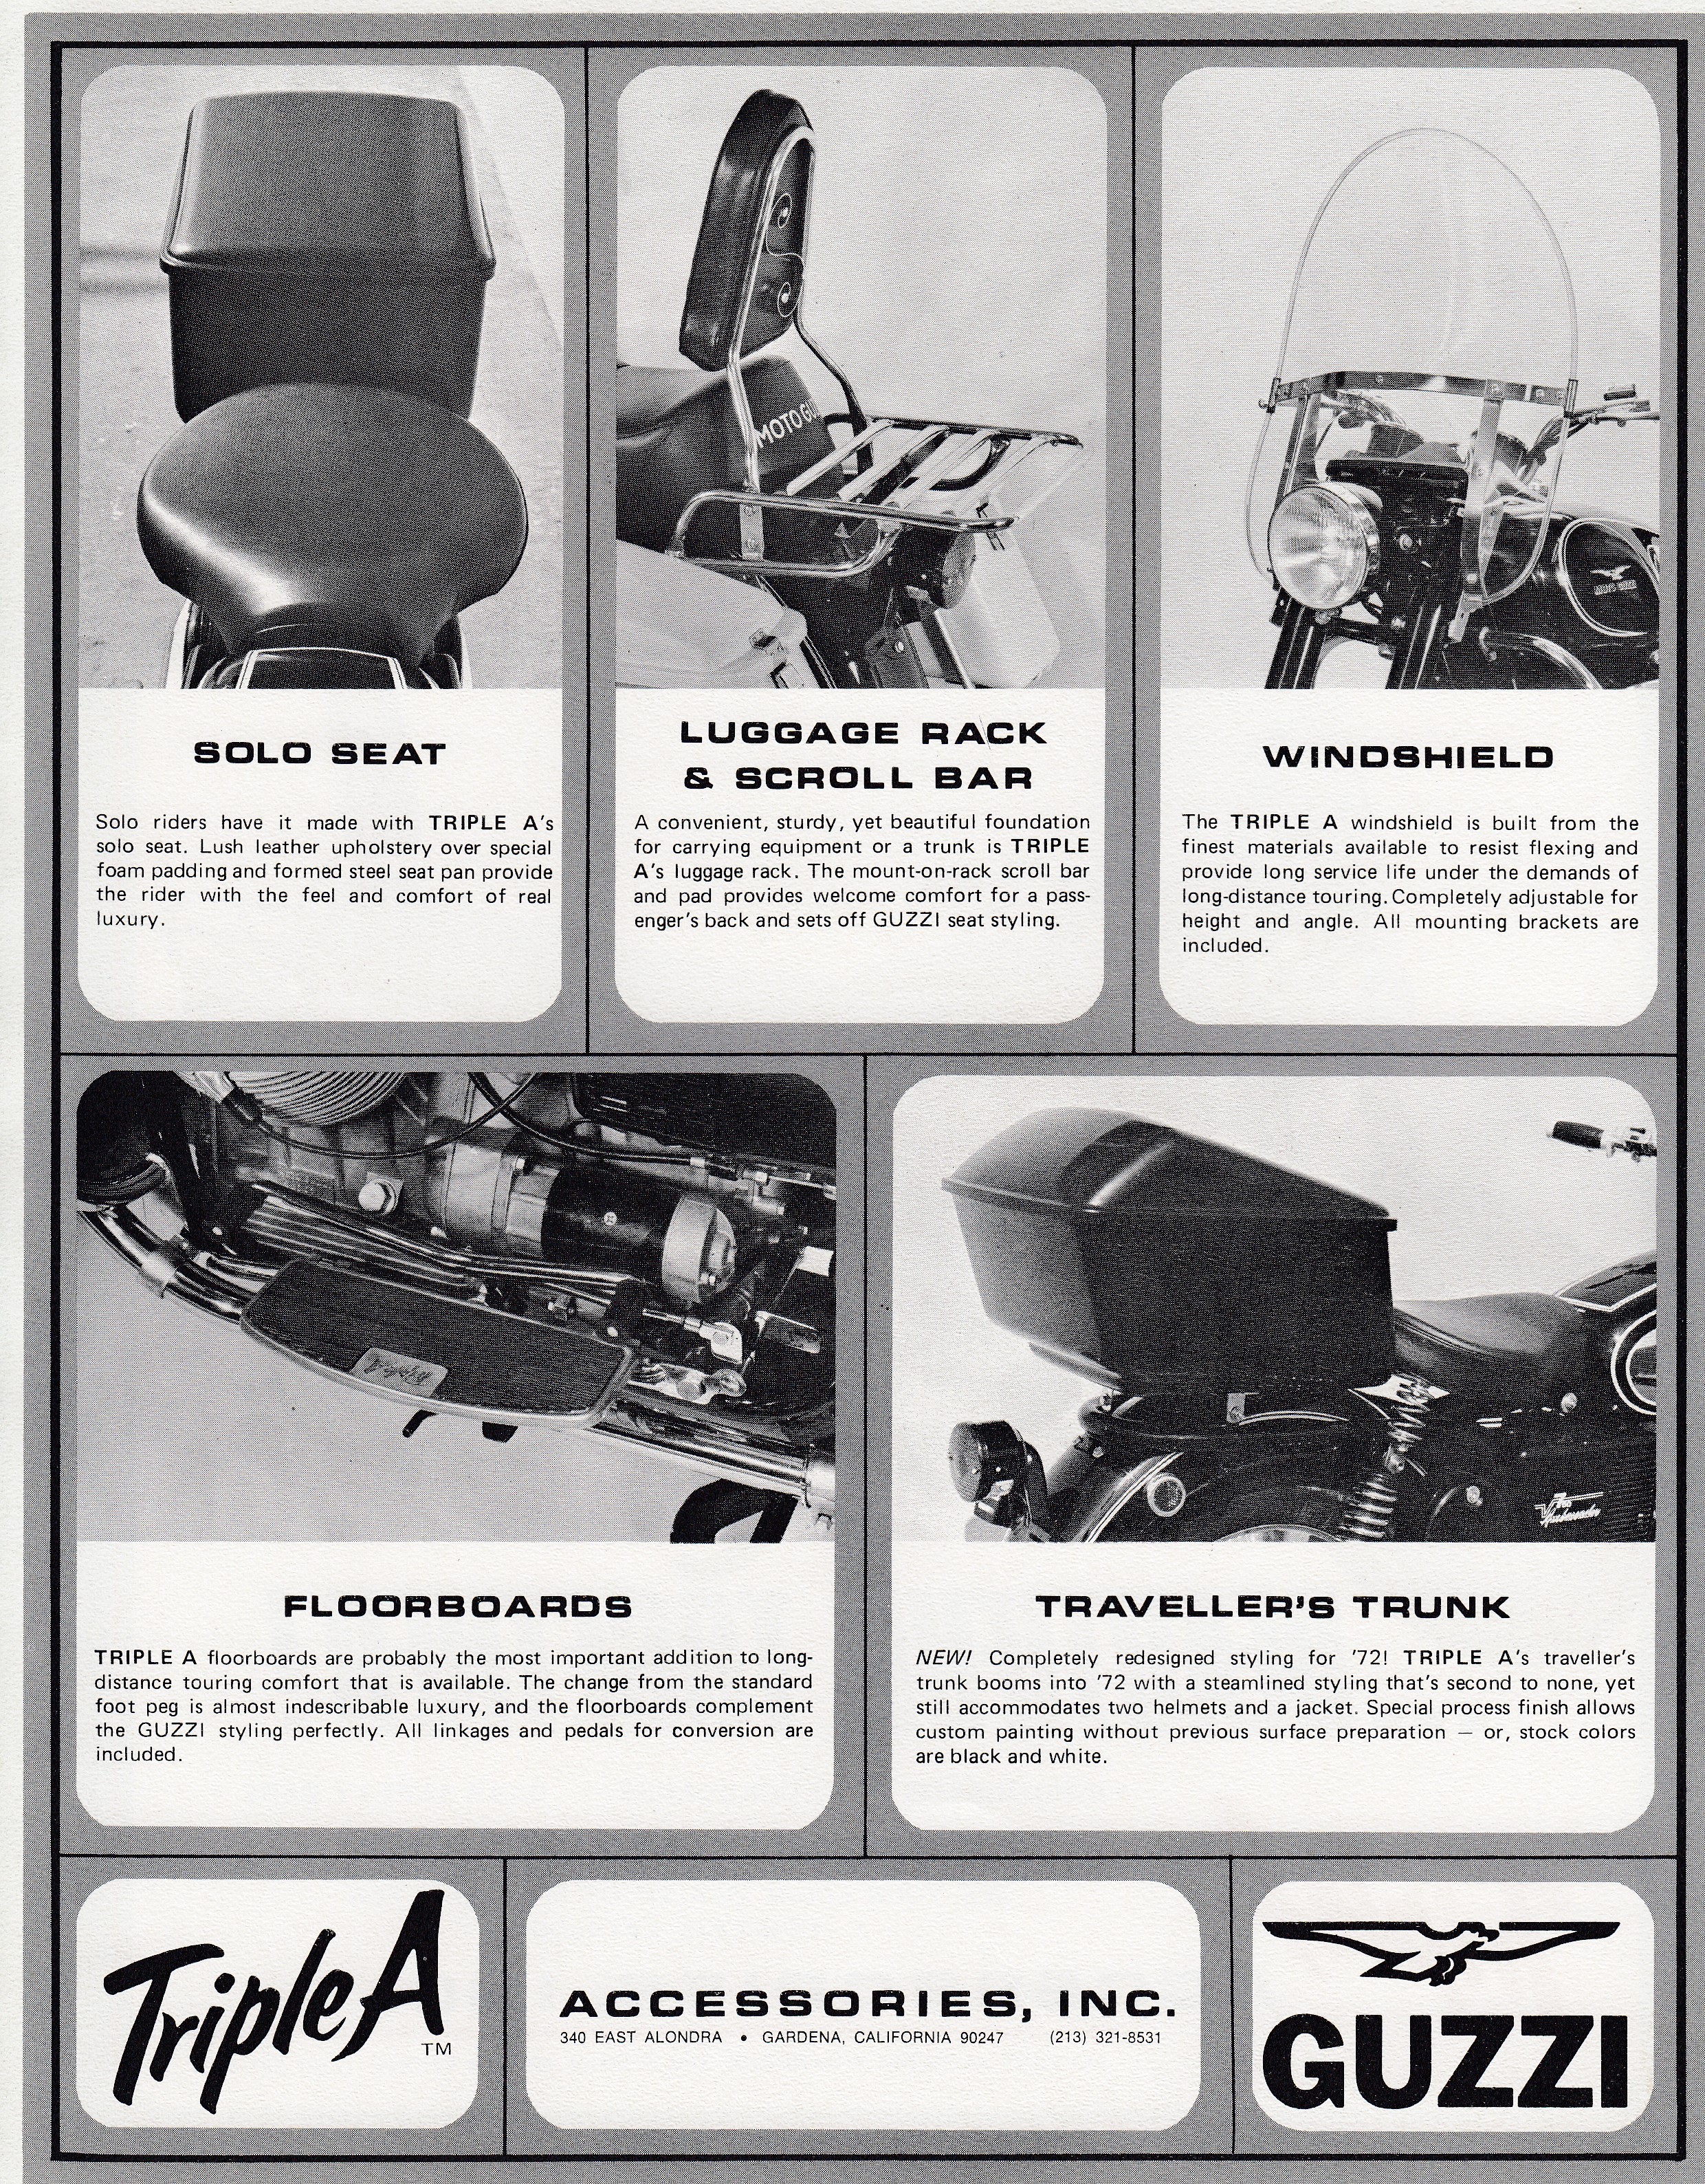 Moto Guzzi advertisement: Triple A accessories for Moto Guzzi motorcycles.